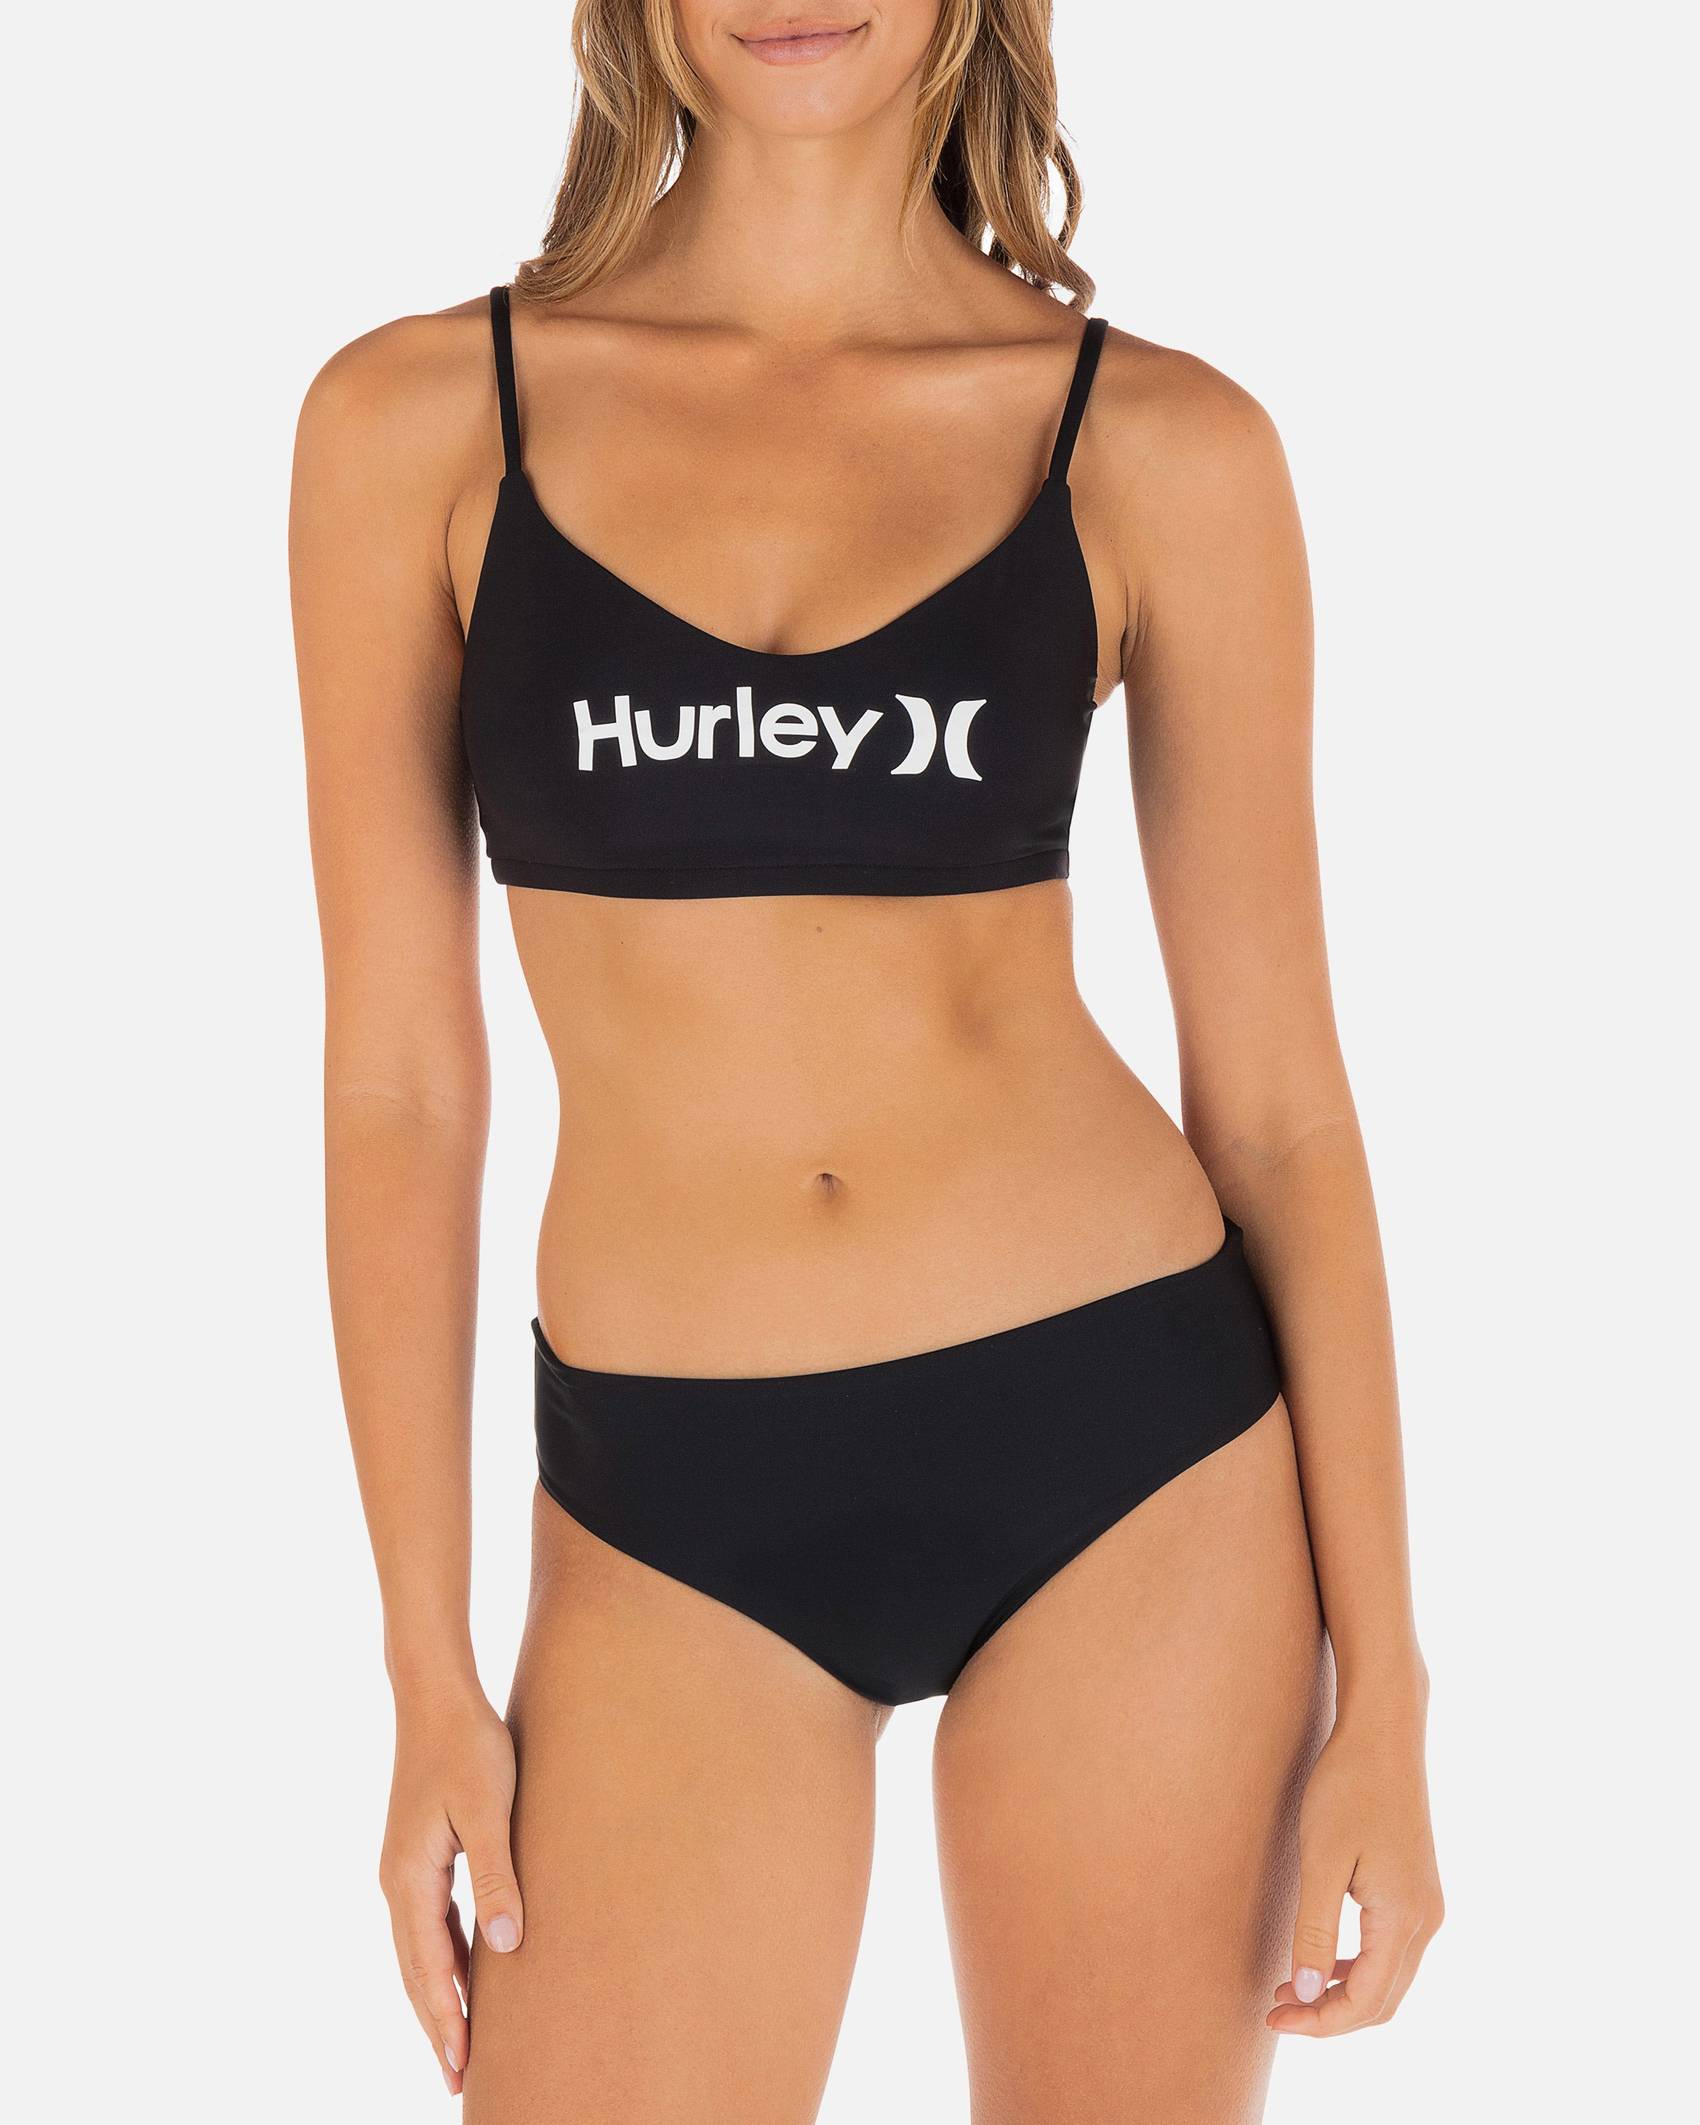 Hurley Adjustable Strap Sports Bras for Women